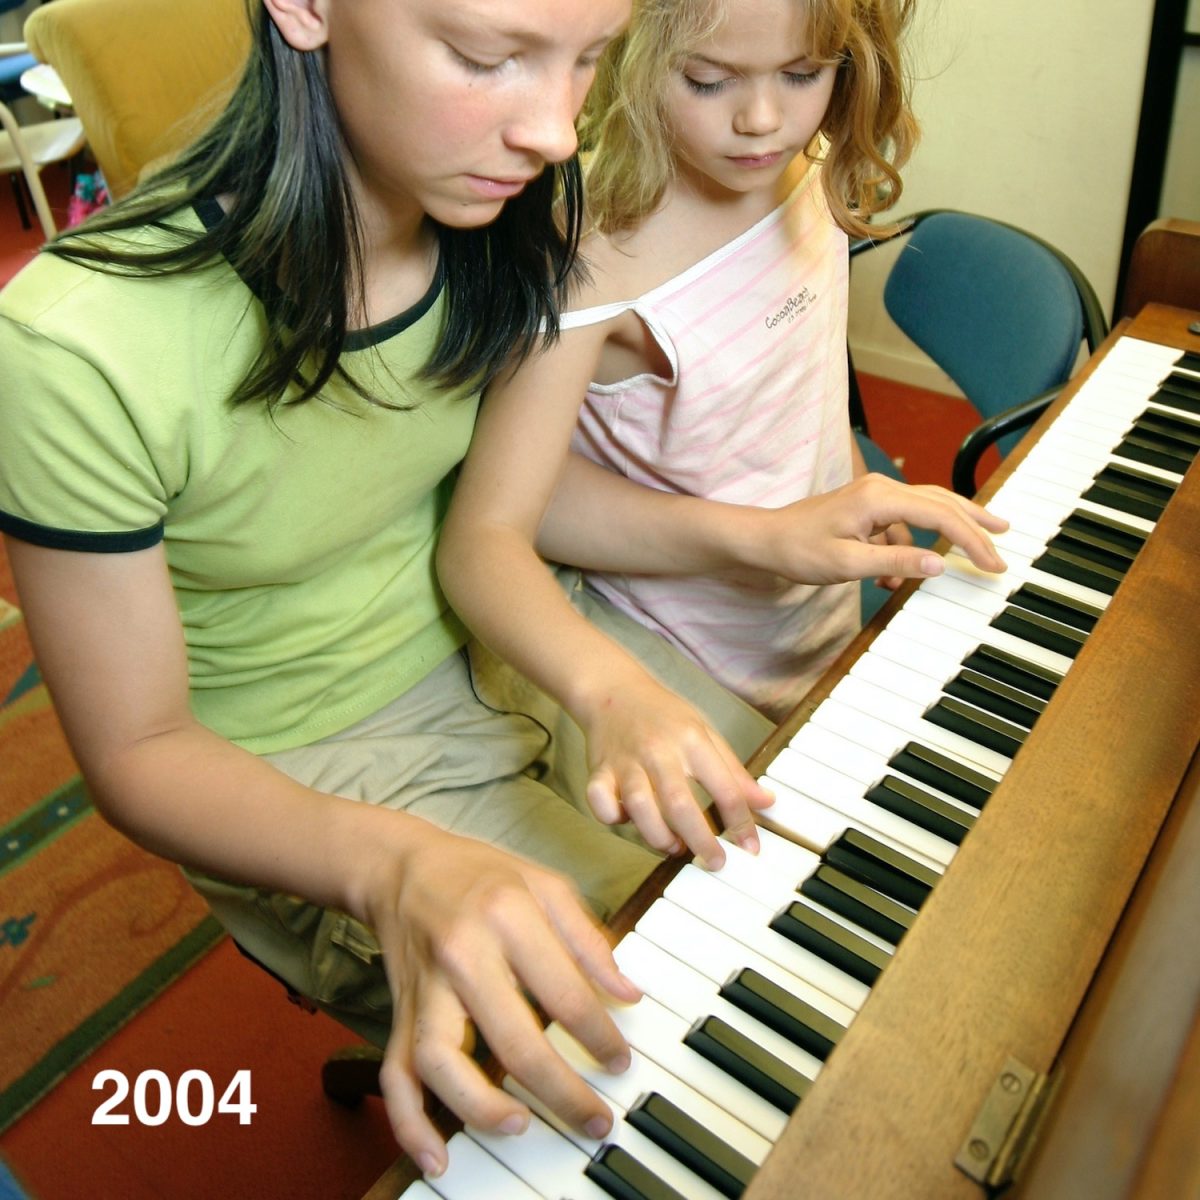 Fleur en Louise spelen samen op de piano